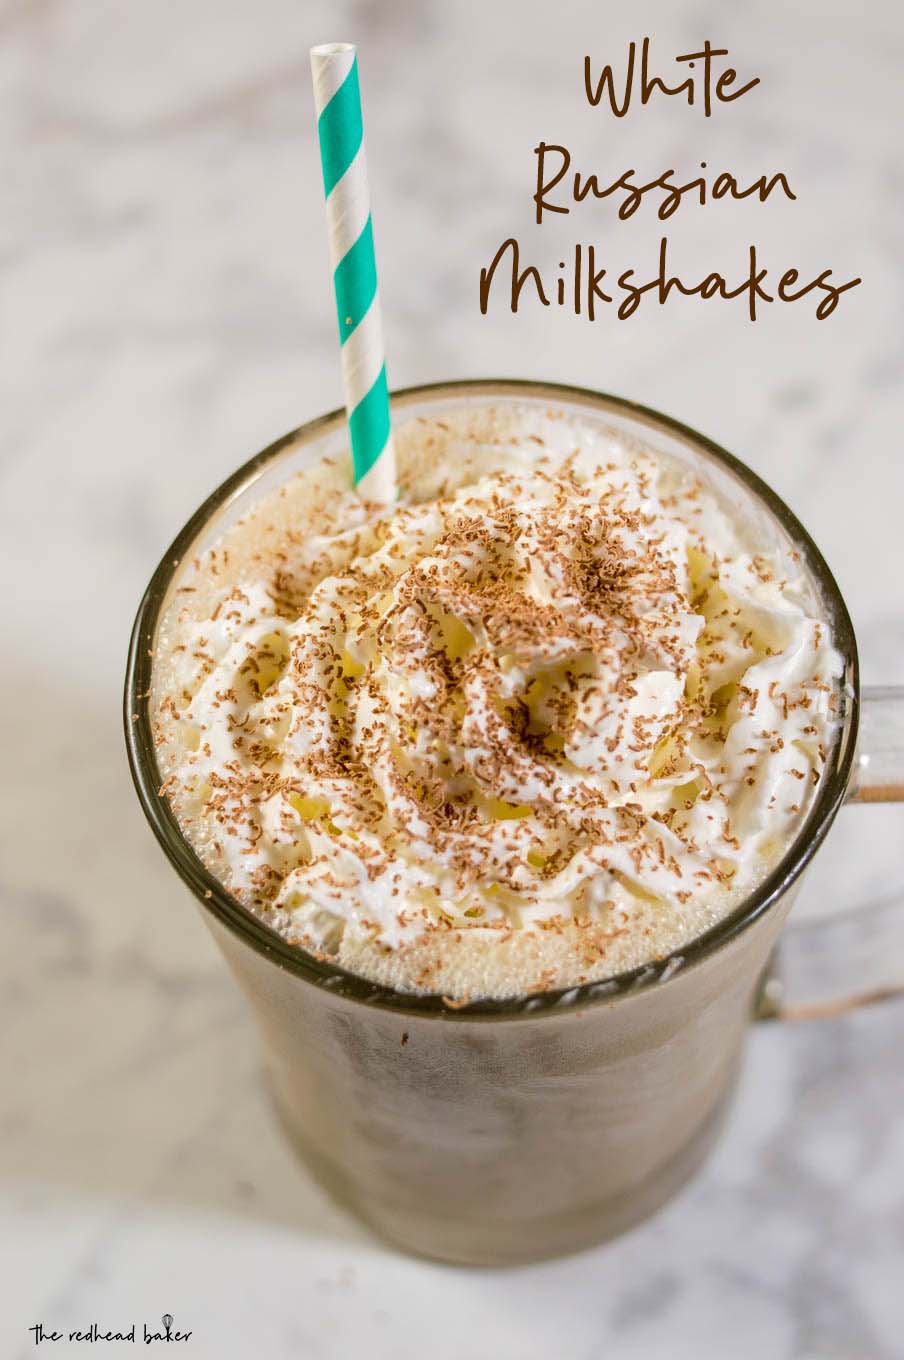 White Russian Milkshakes Recipe By The Redhead Baker,Cardamom Seeds Powder